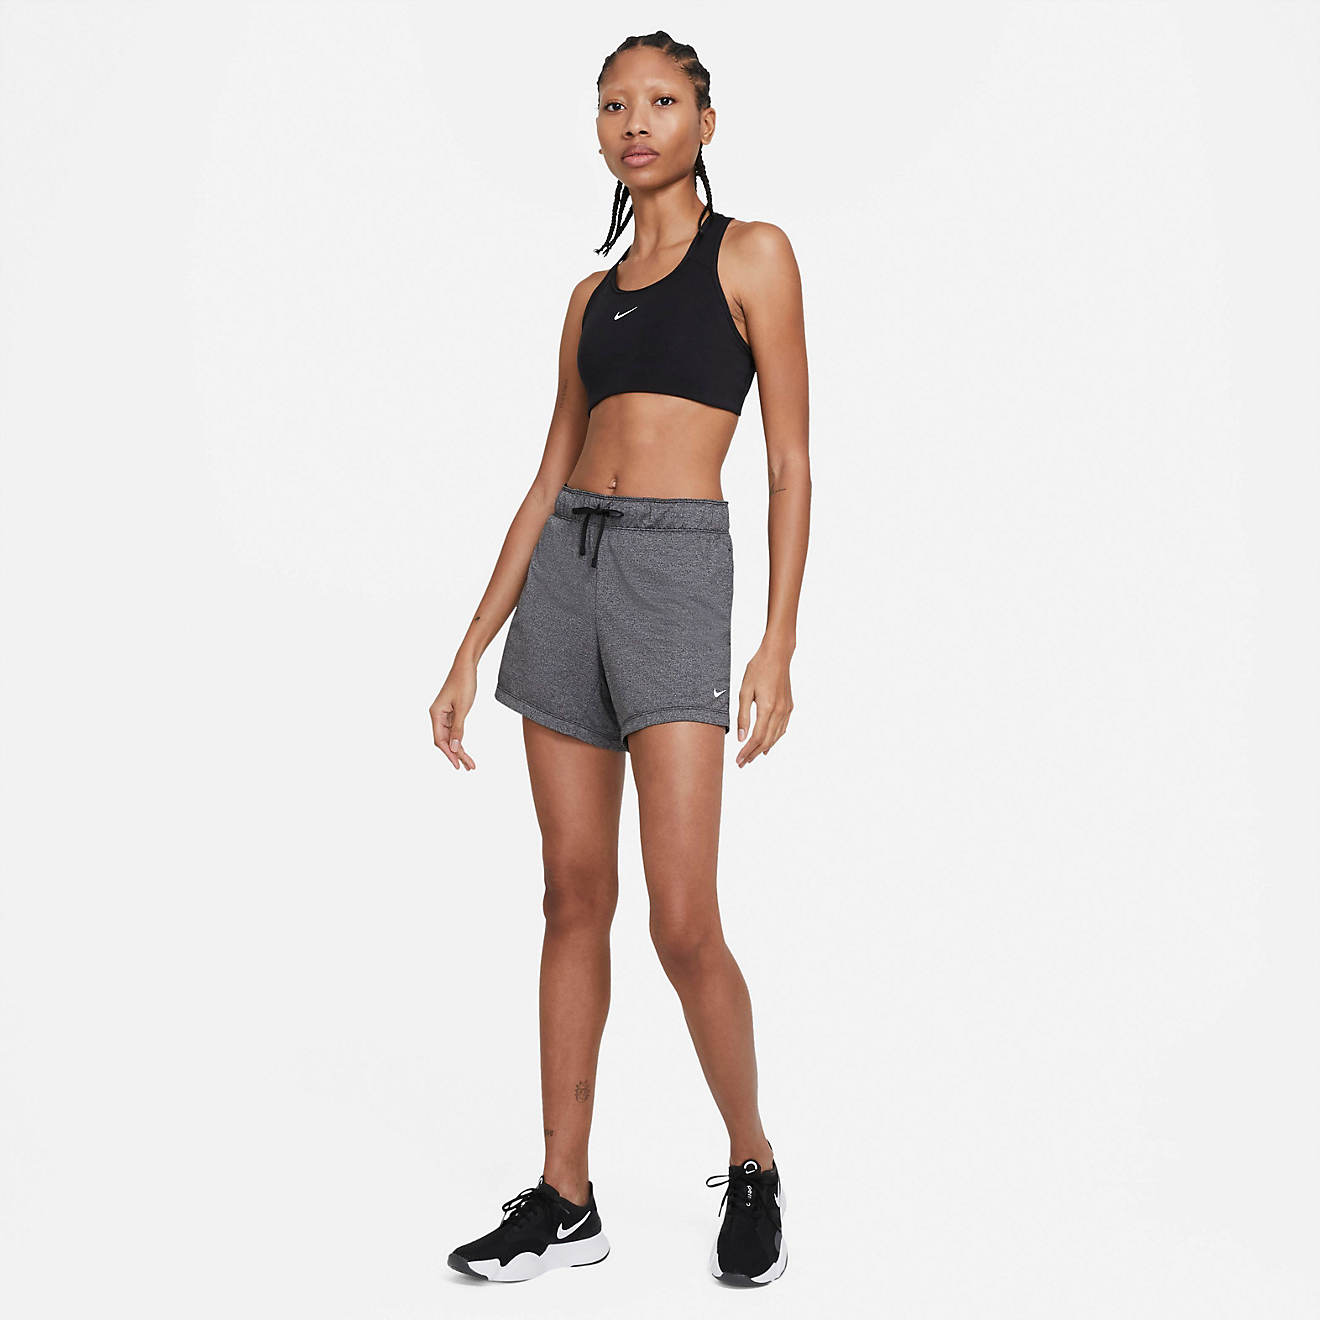 Nike Women's Dri-FIT Attack Training Shorts 5 in